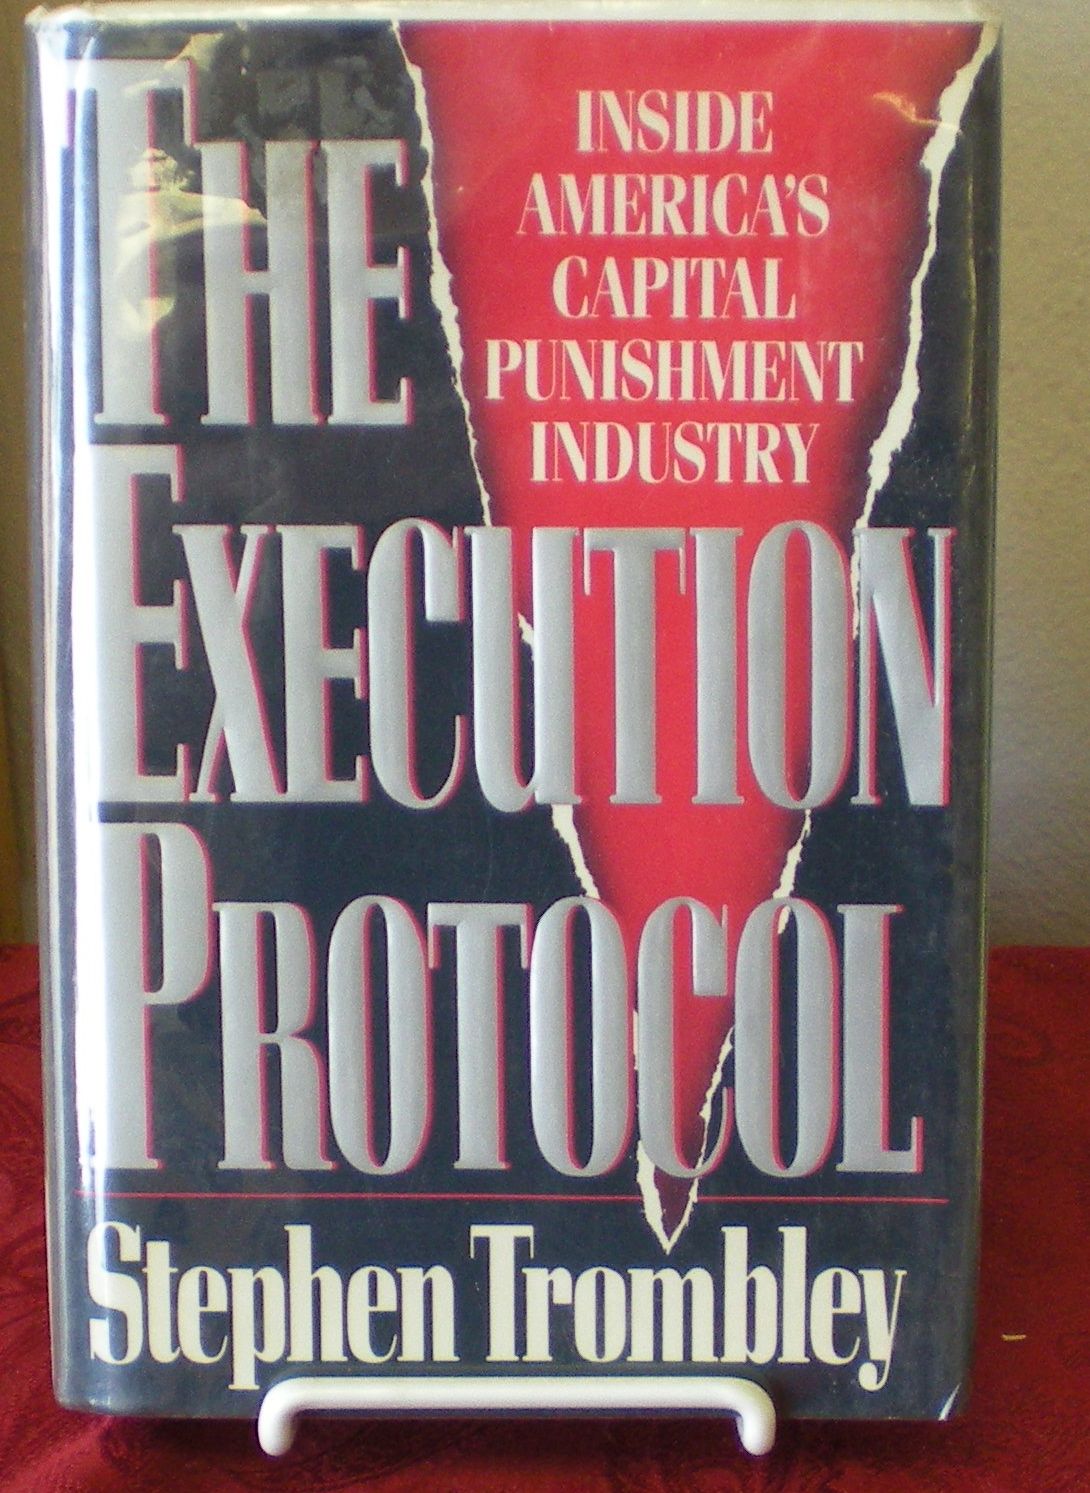 The Execution Protocol